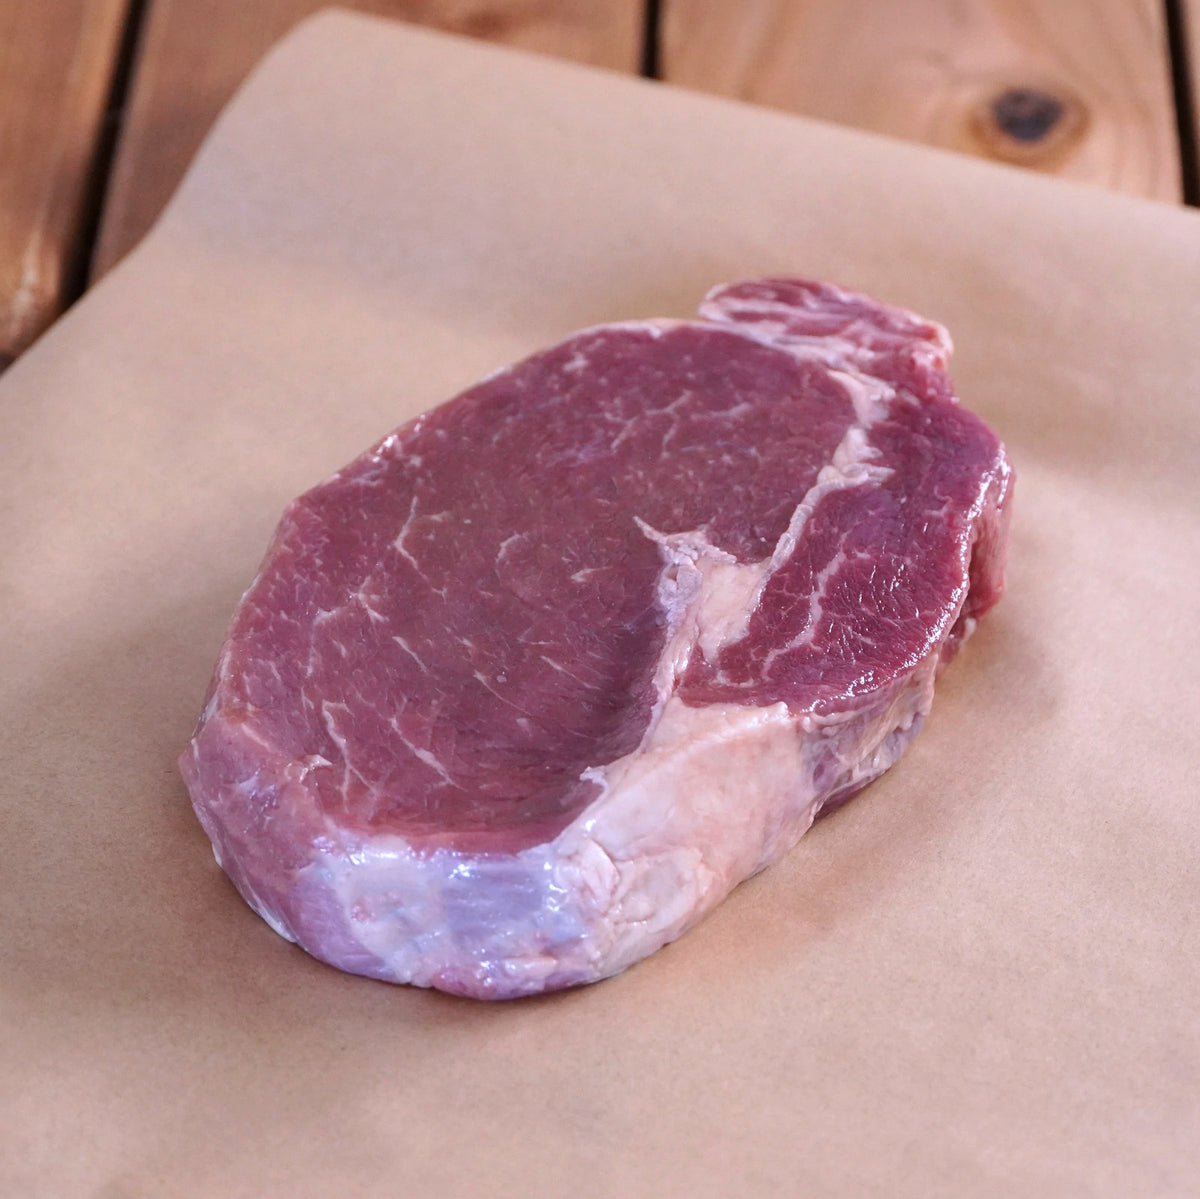 Grass-Fed Beef Ribeye Steak New Zealand (200g) - Horizon Farms